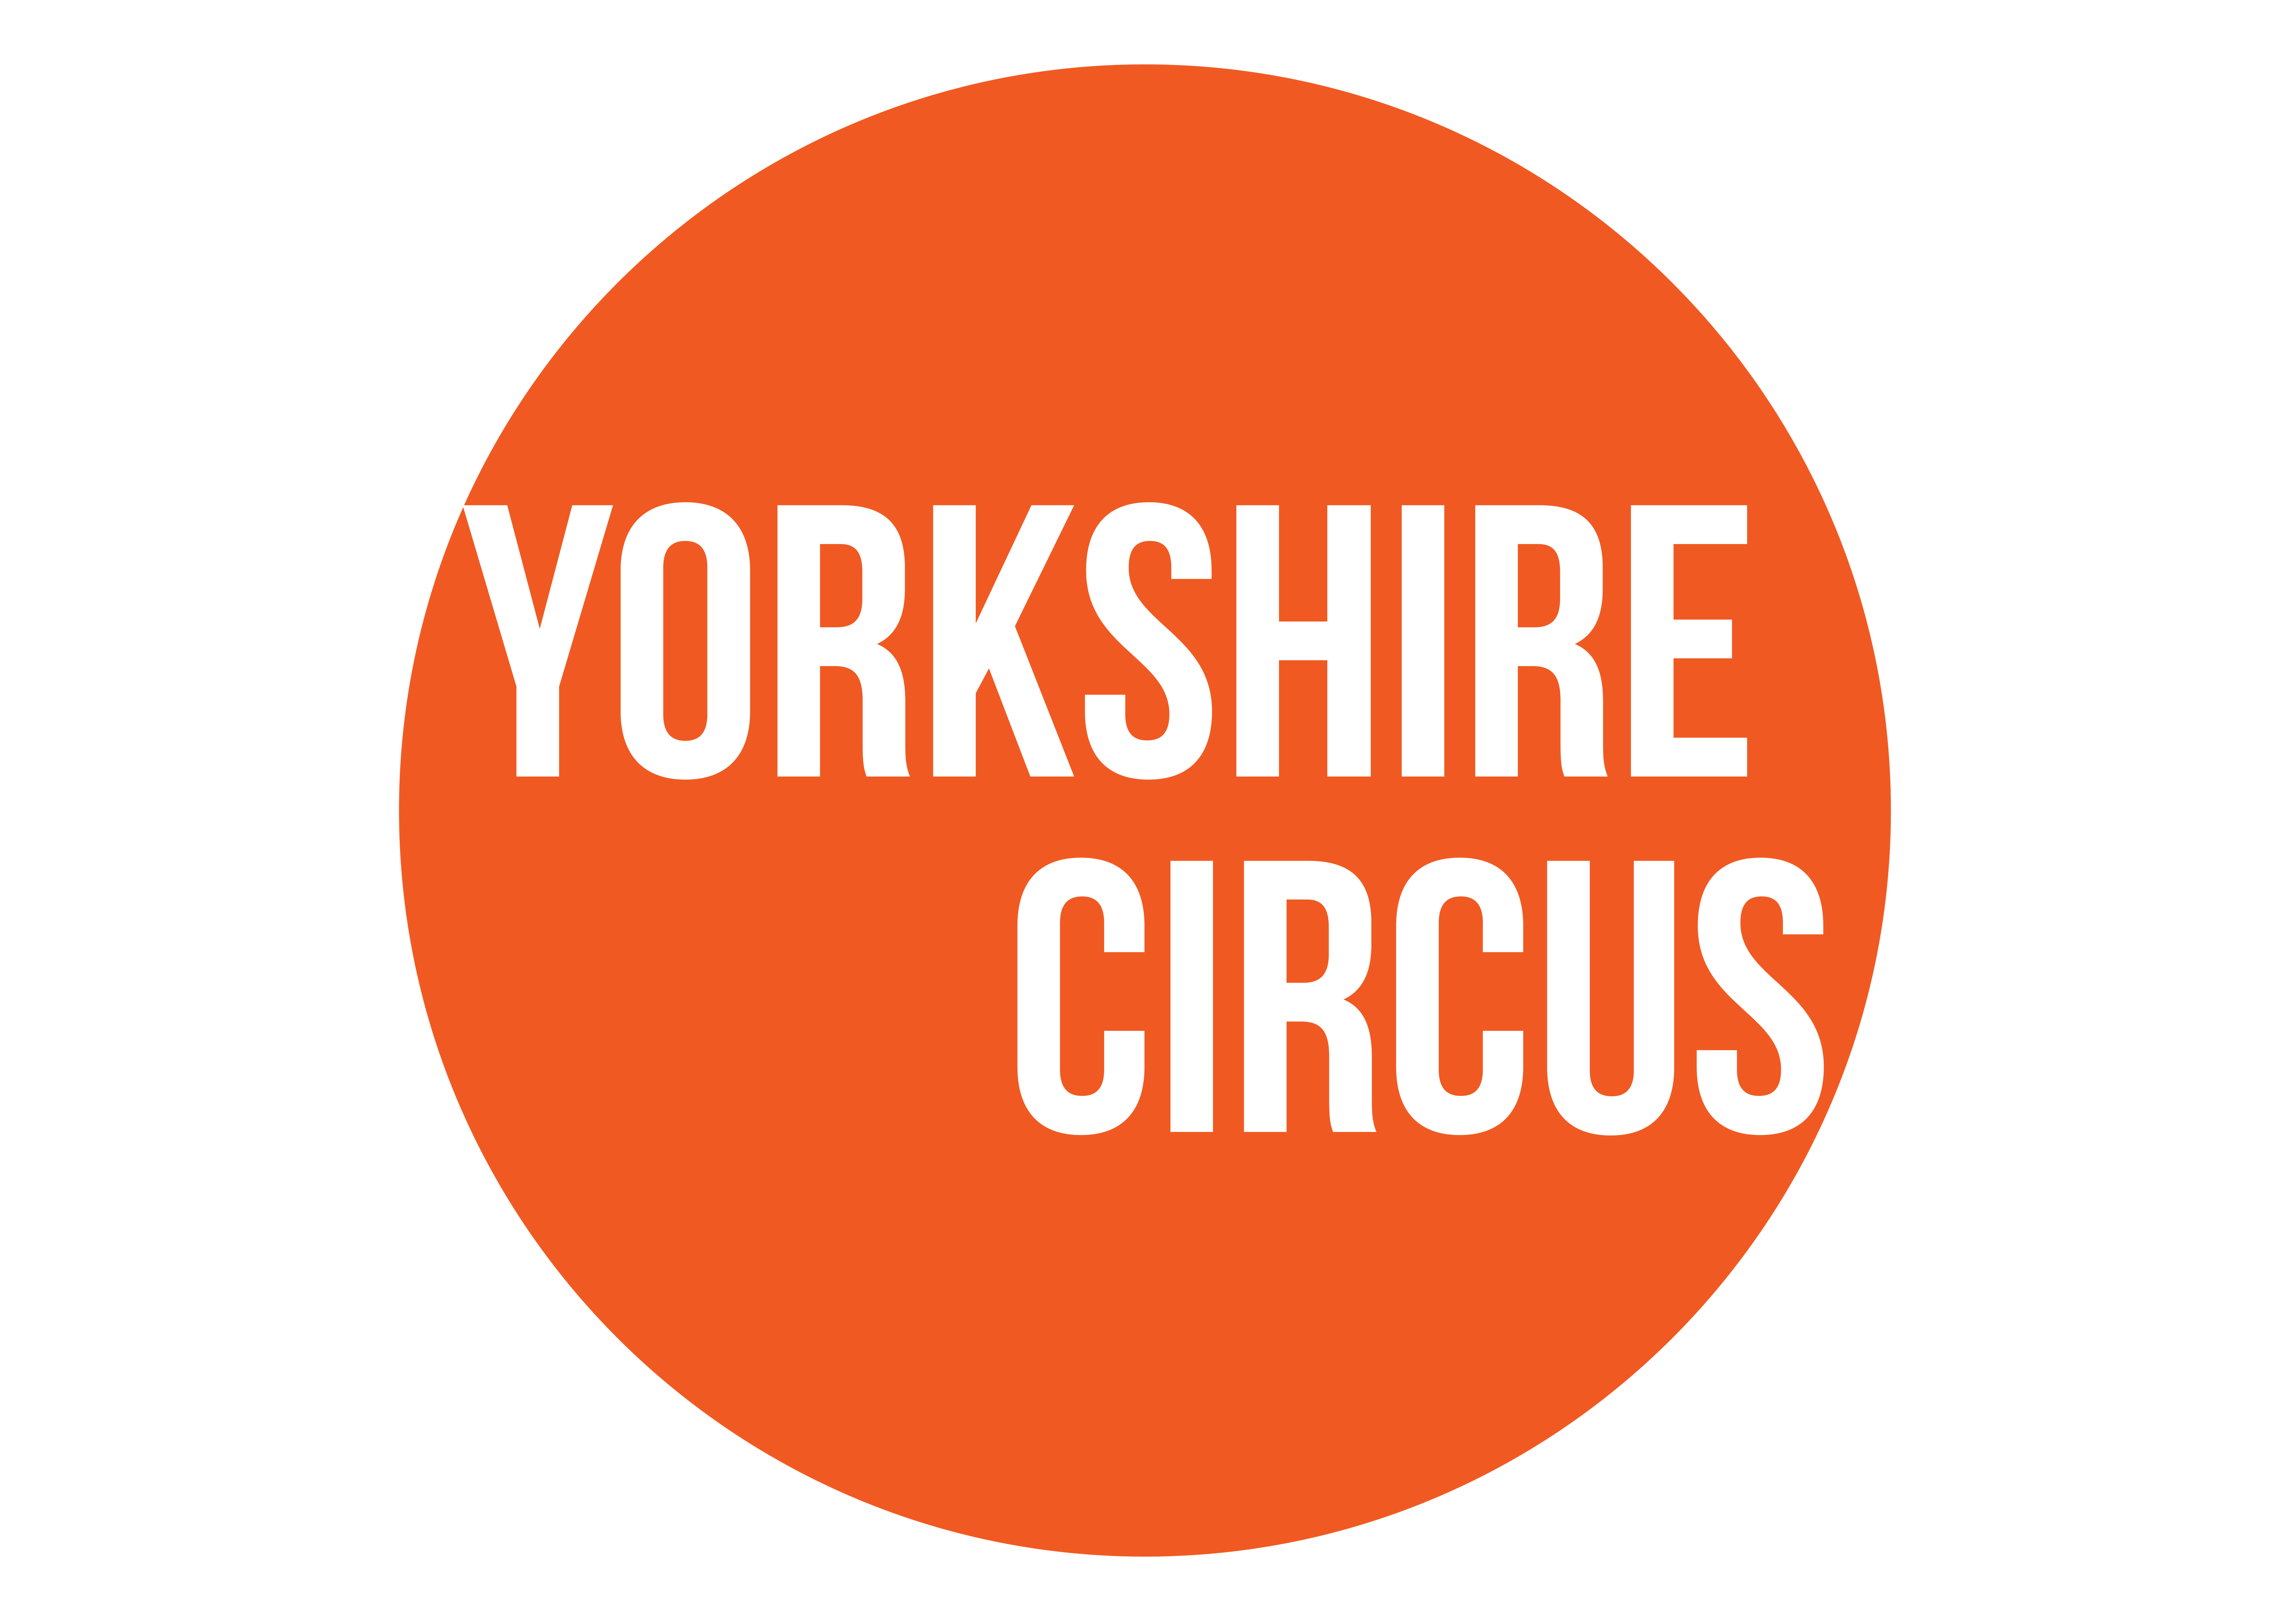 yorkshire circus logo pack 2020-04-2